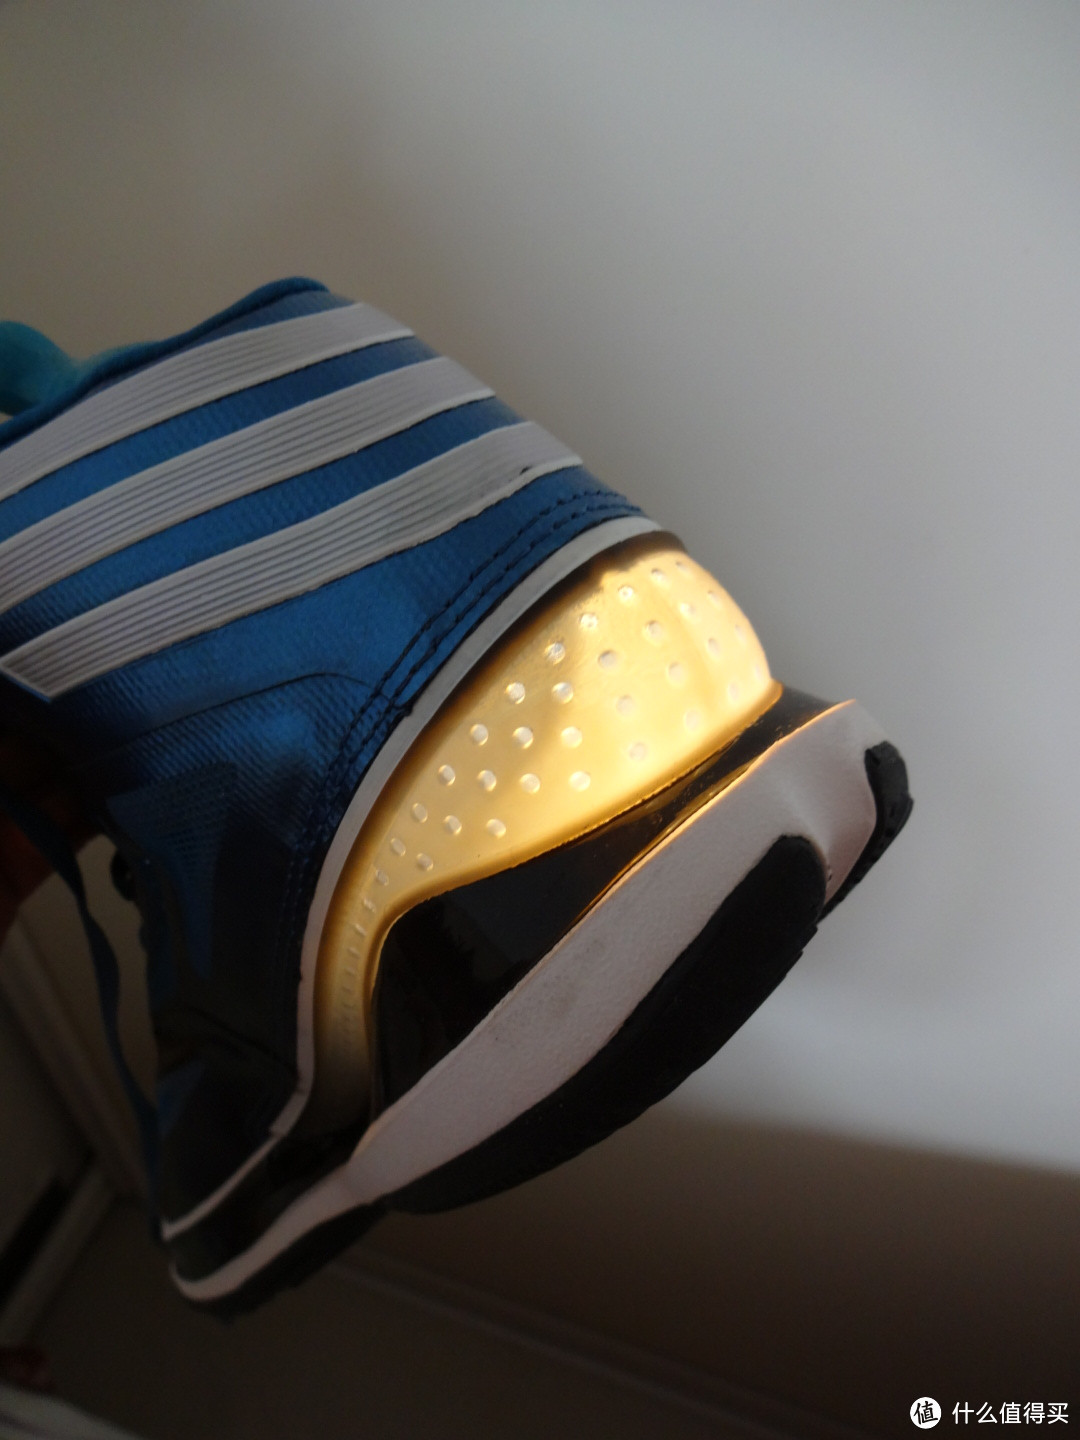 adidas 阿迪达斯 AdiZero Crazy Light III Ricky Rubio 男款篮球鞋